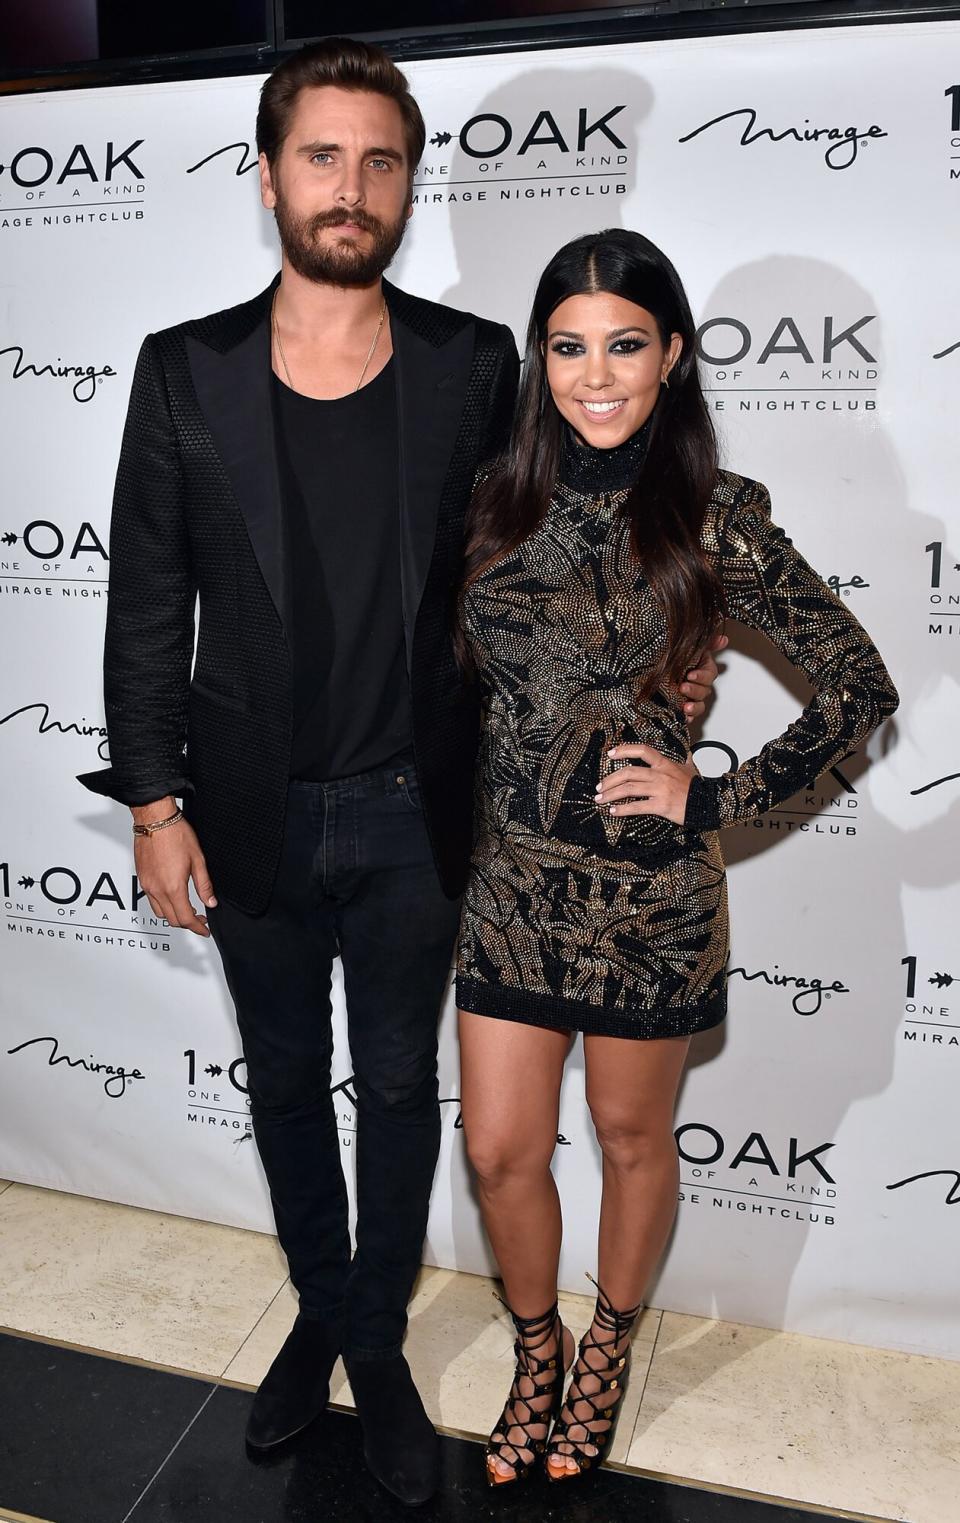 Scott Disick (L) and Kourtney Kardashian arrive at his birthday celebration at 1 OAK Nightclub at The Mirage Hotel & Casino on May 23, 2015 in Las Vegas, Nevada